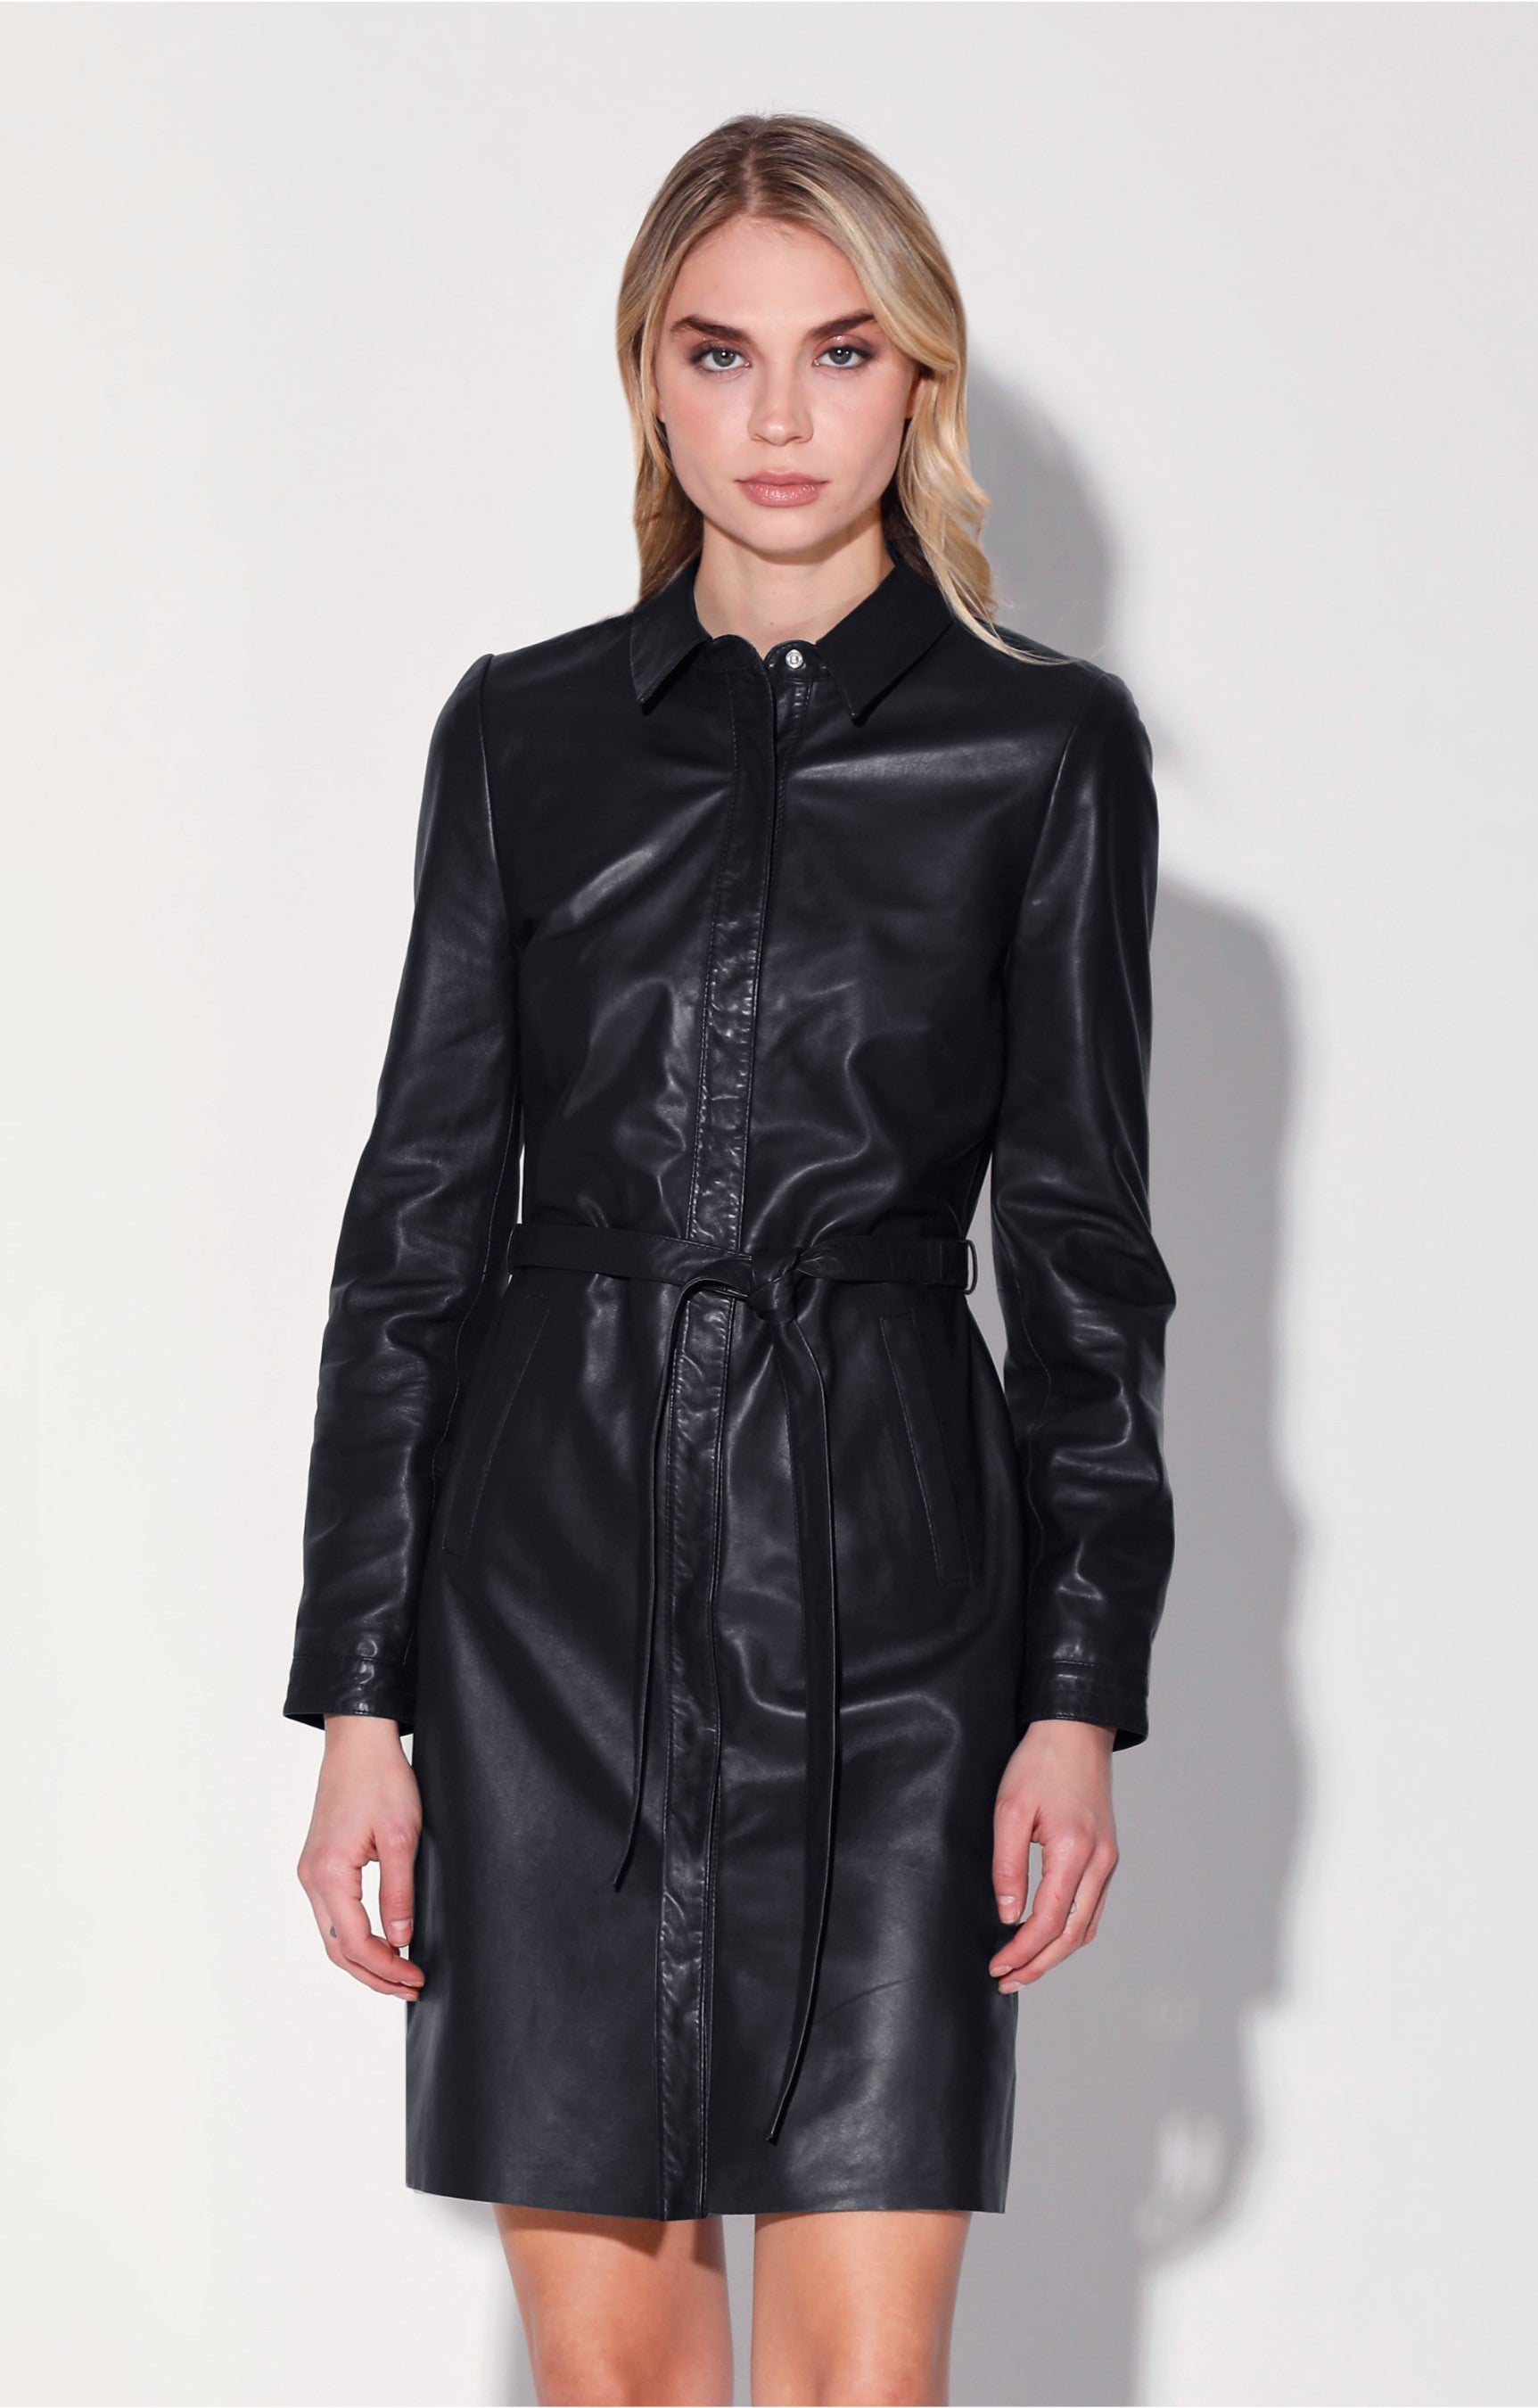 Buy Clara Dress, Black - Leather by Walter Baker